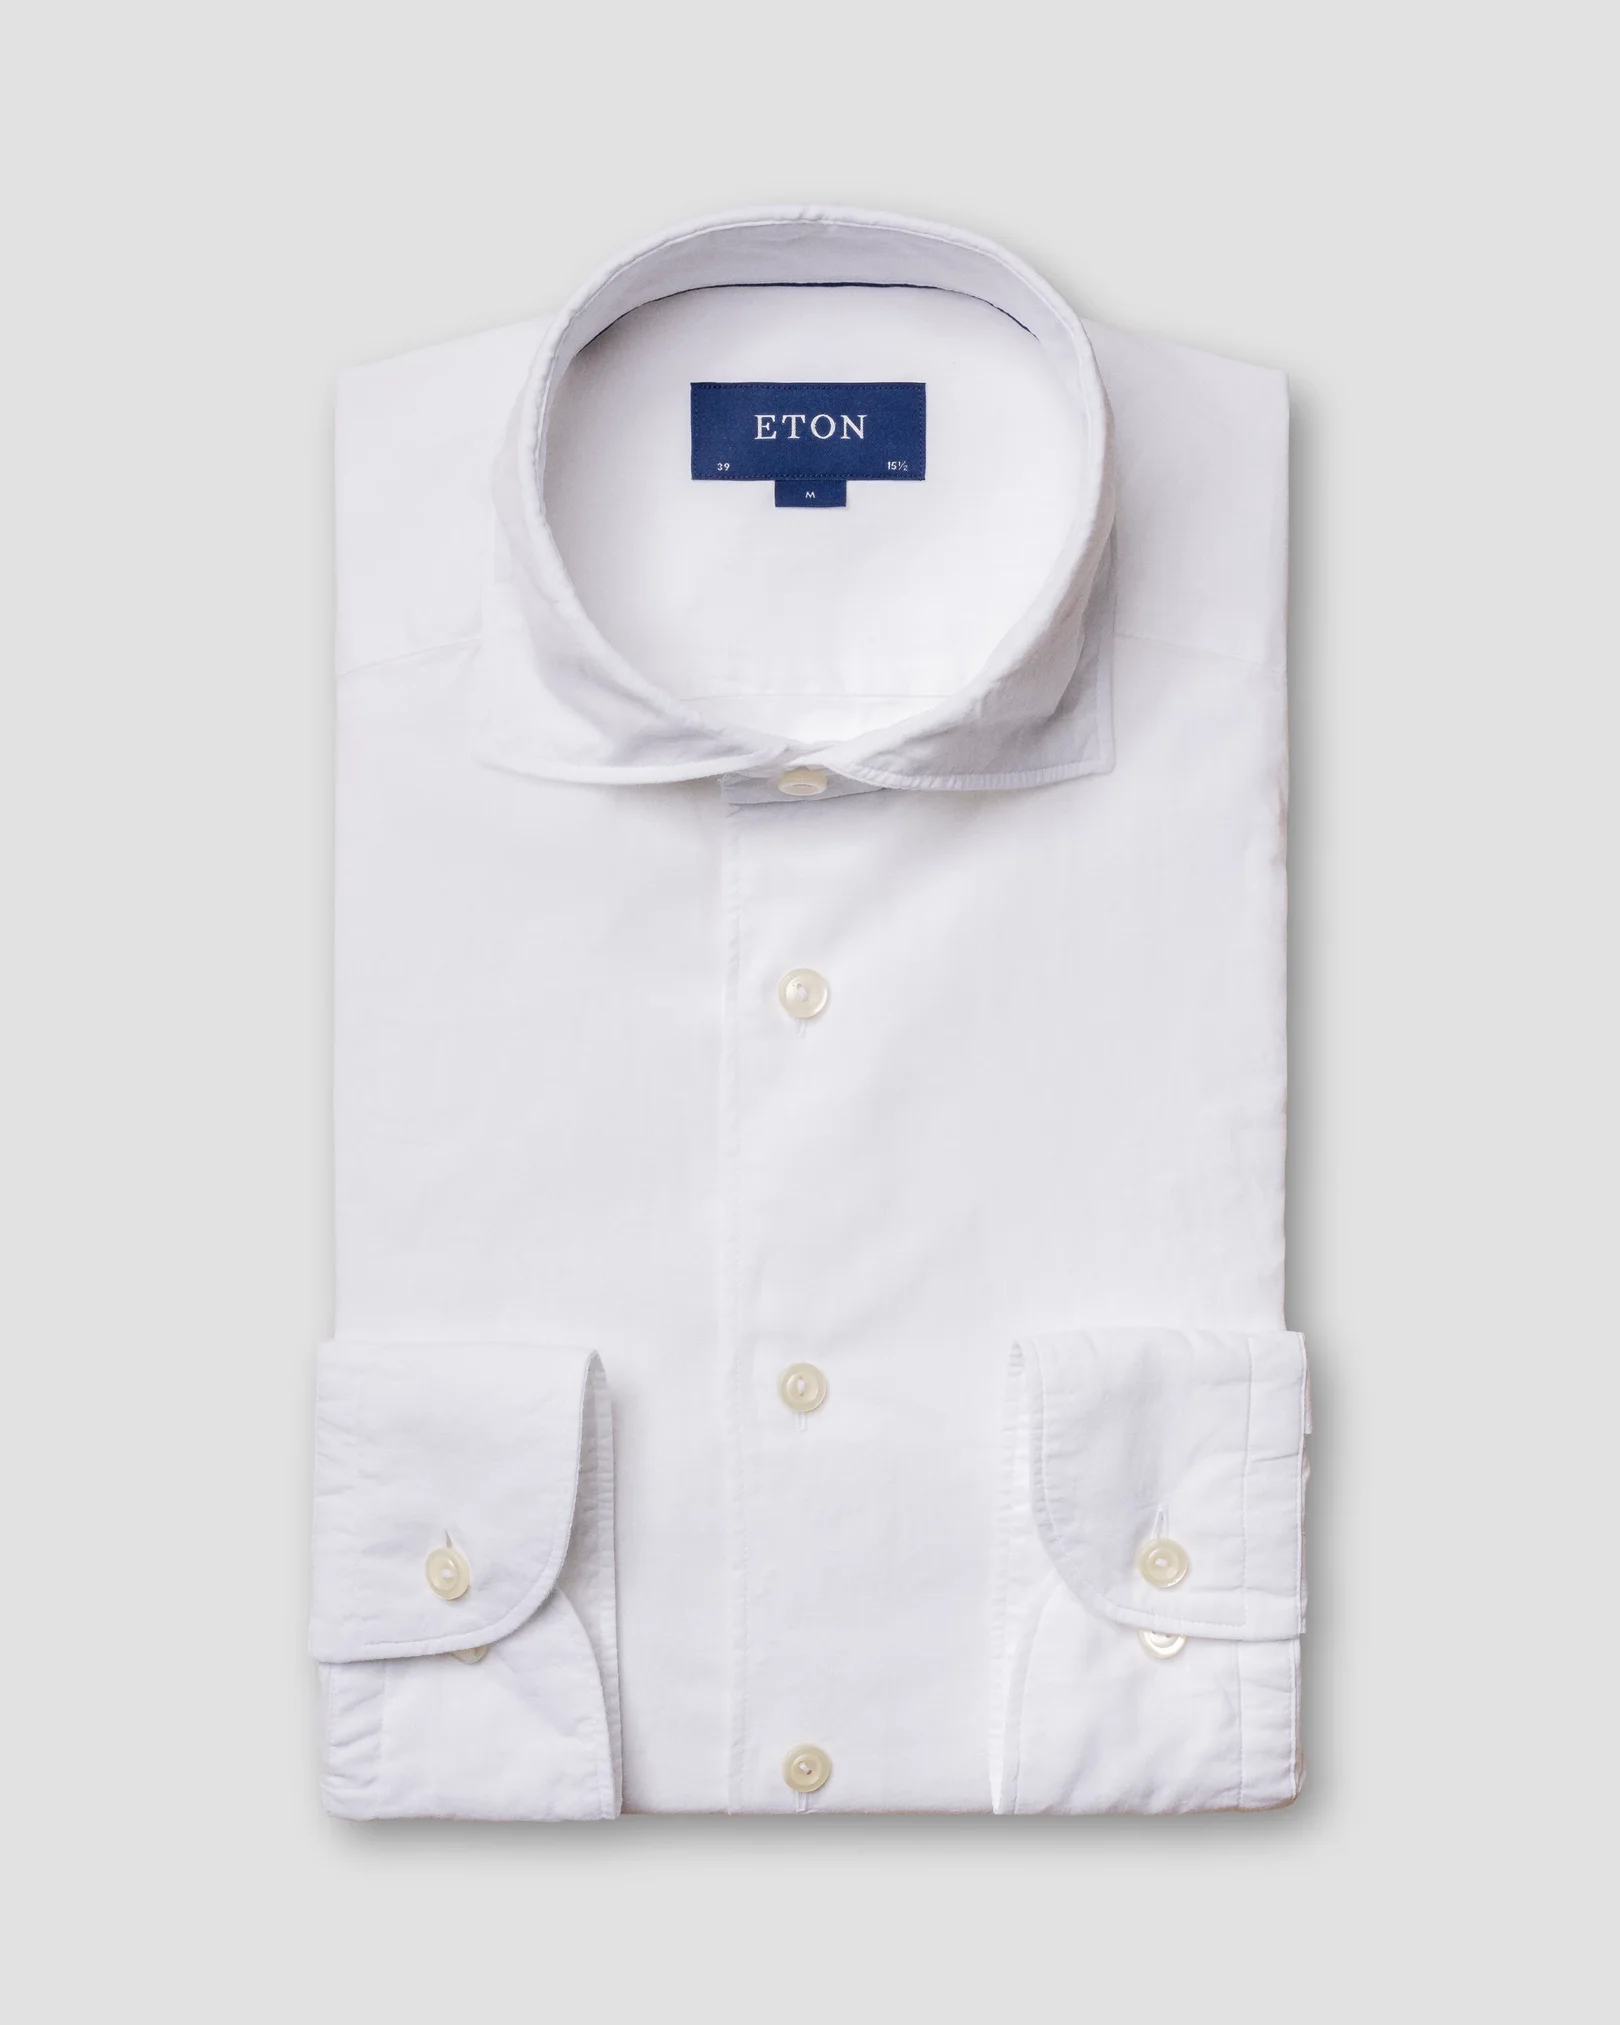 Eton - white cotton linen shirt soft